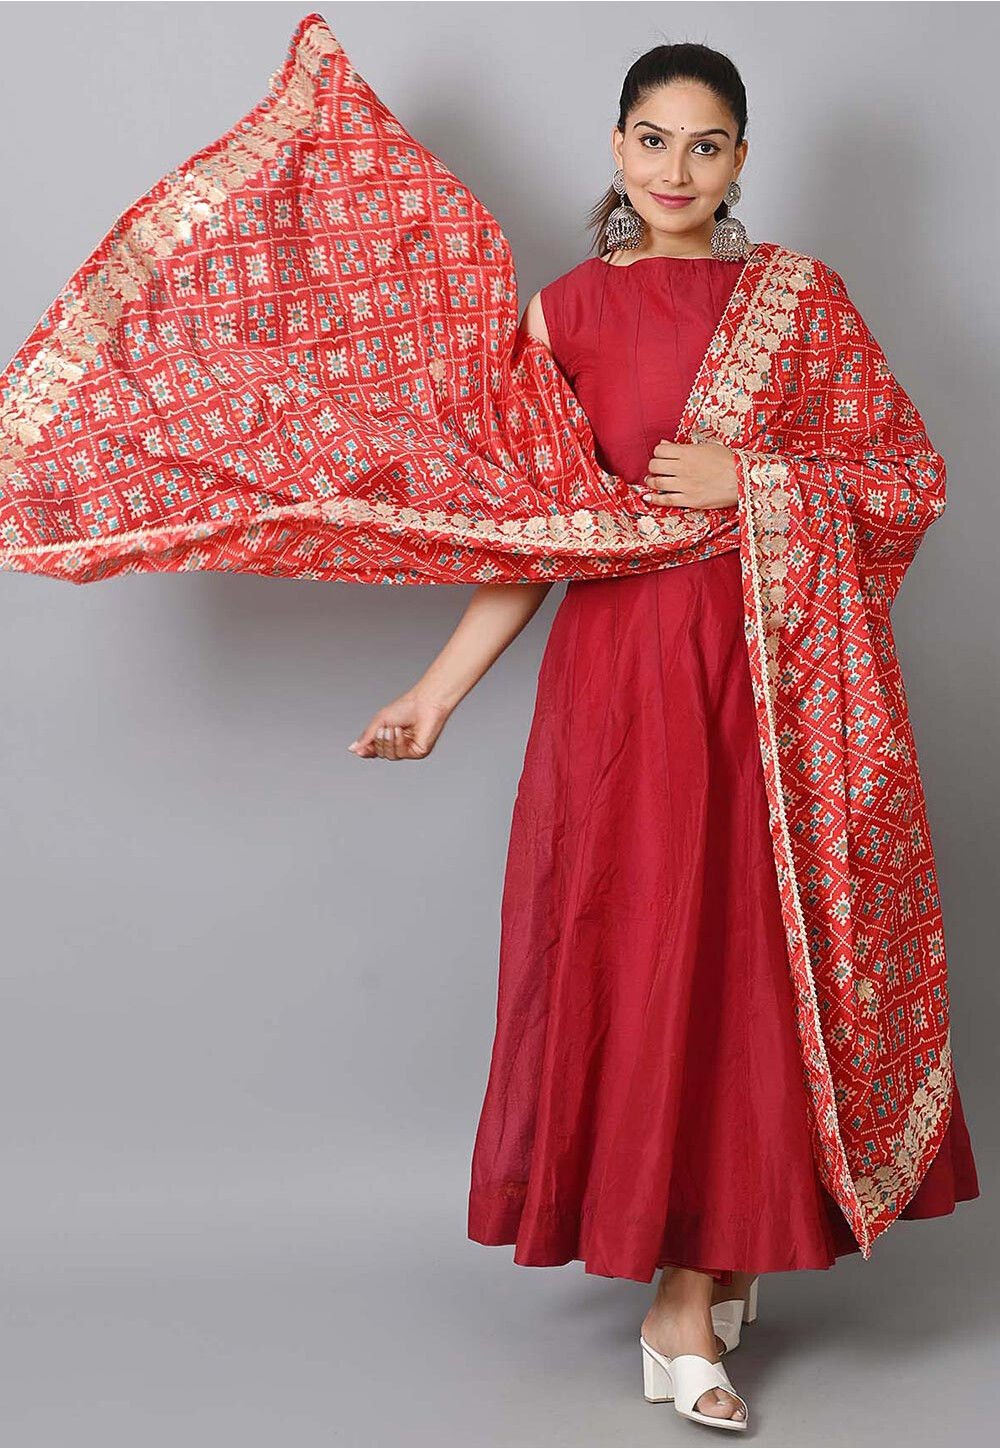 Red Salwar Suit - Buy Red Salwar Suits Online in India